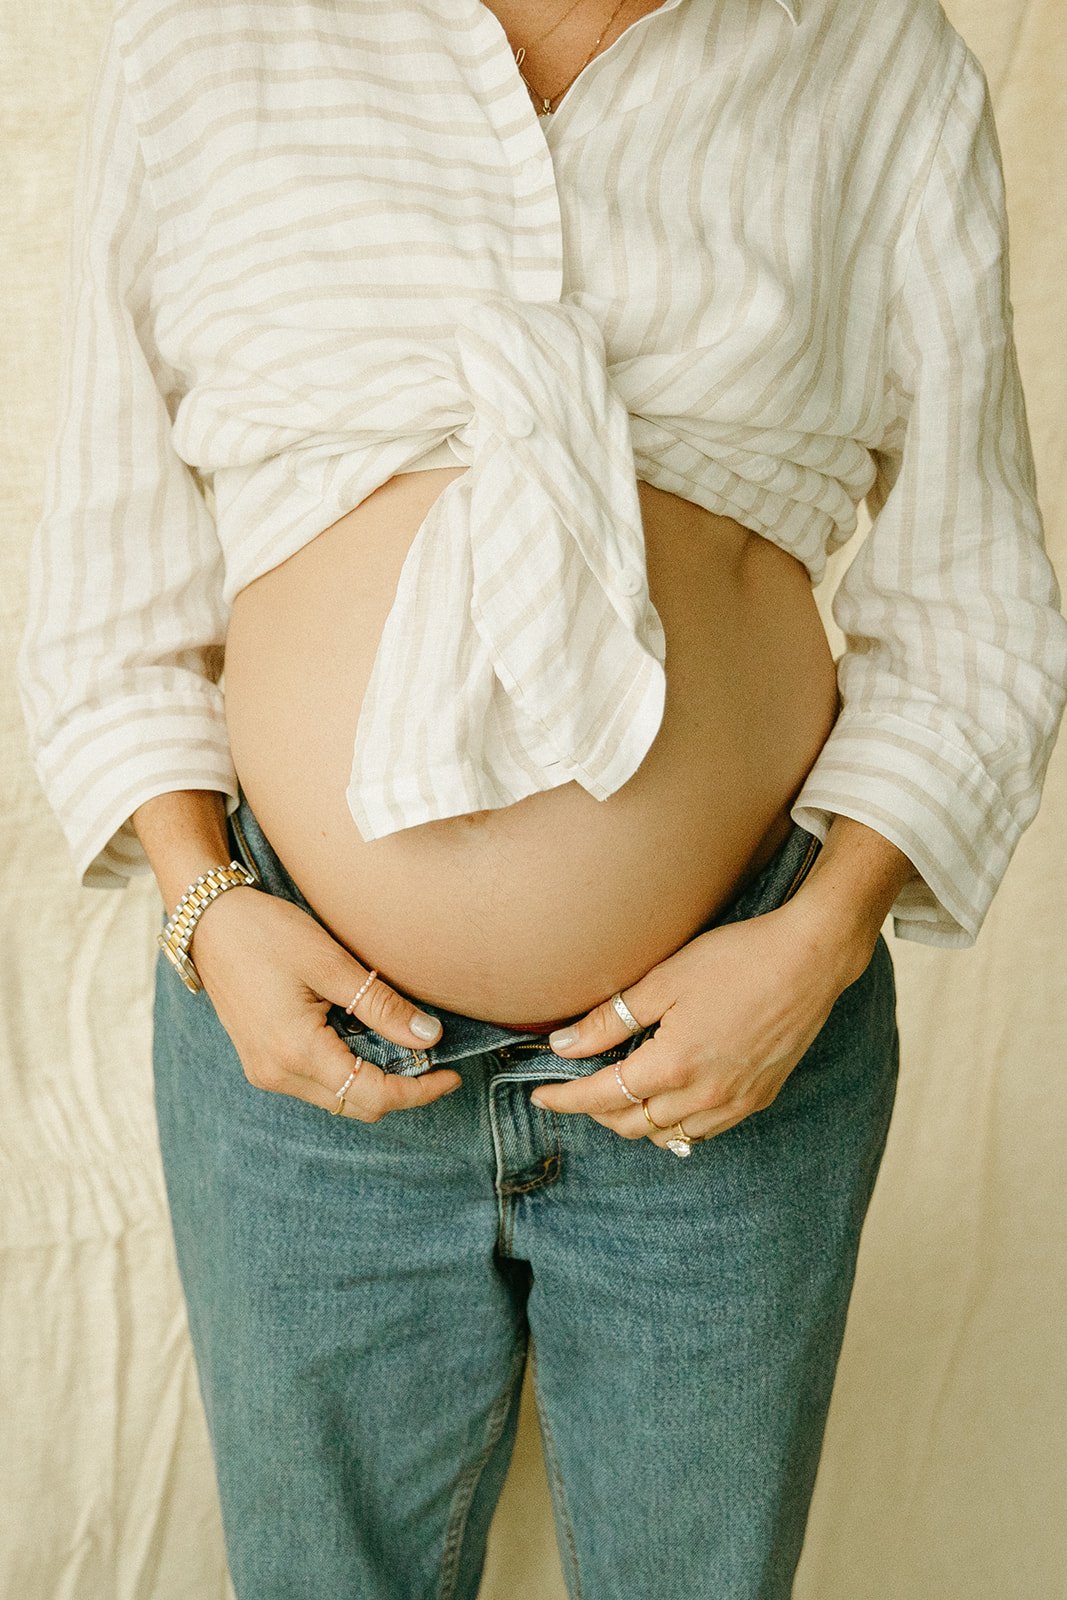 Film and Digital Studio Maternity Photoshoot